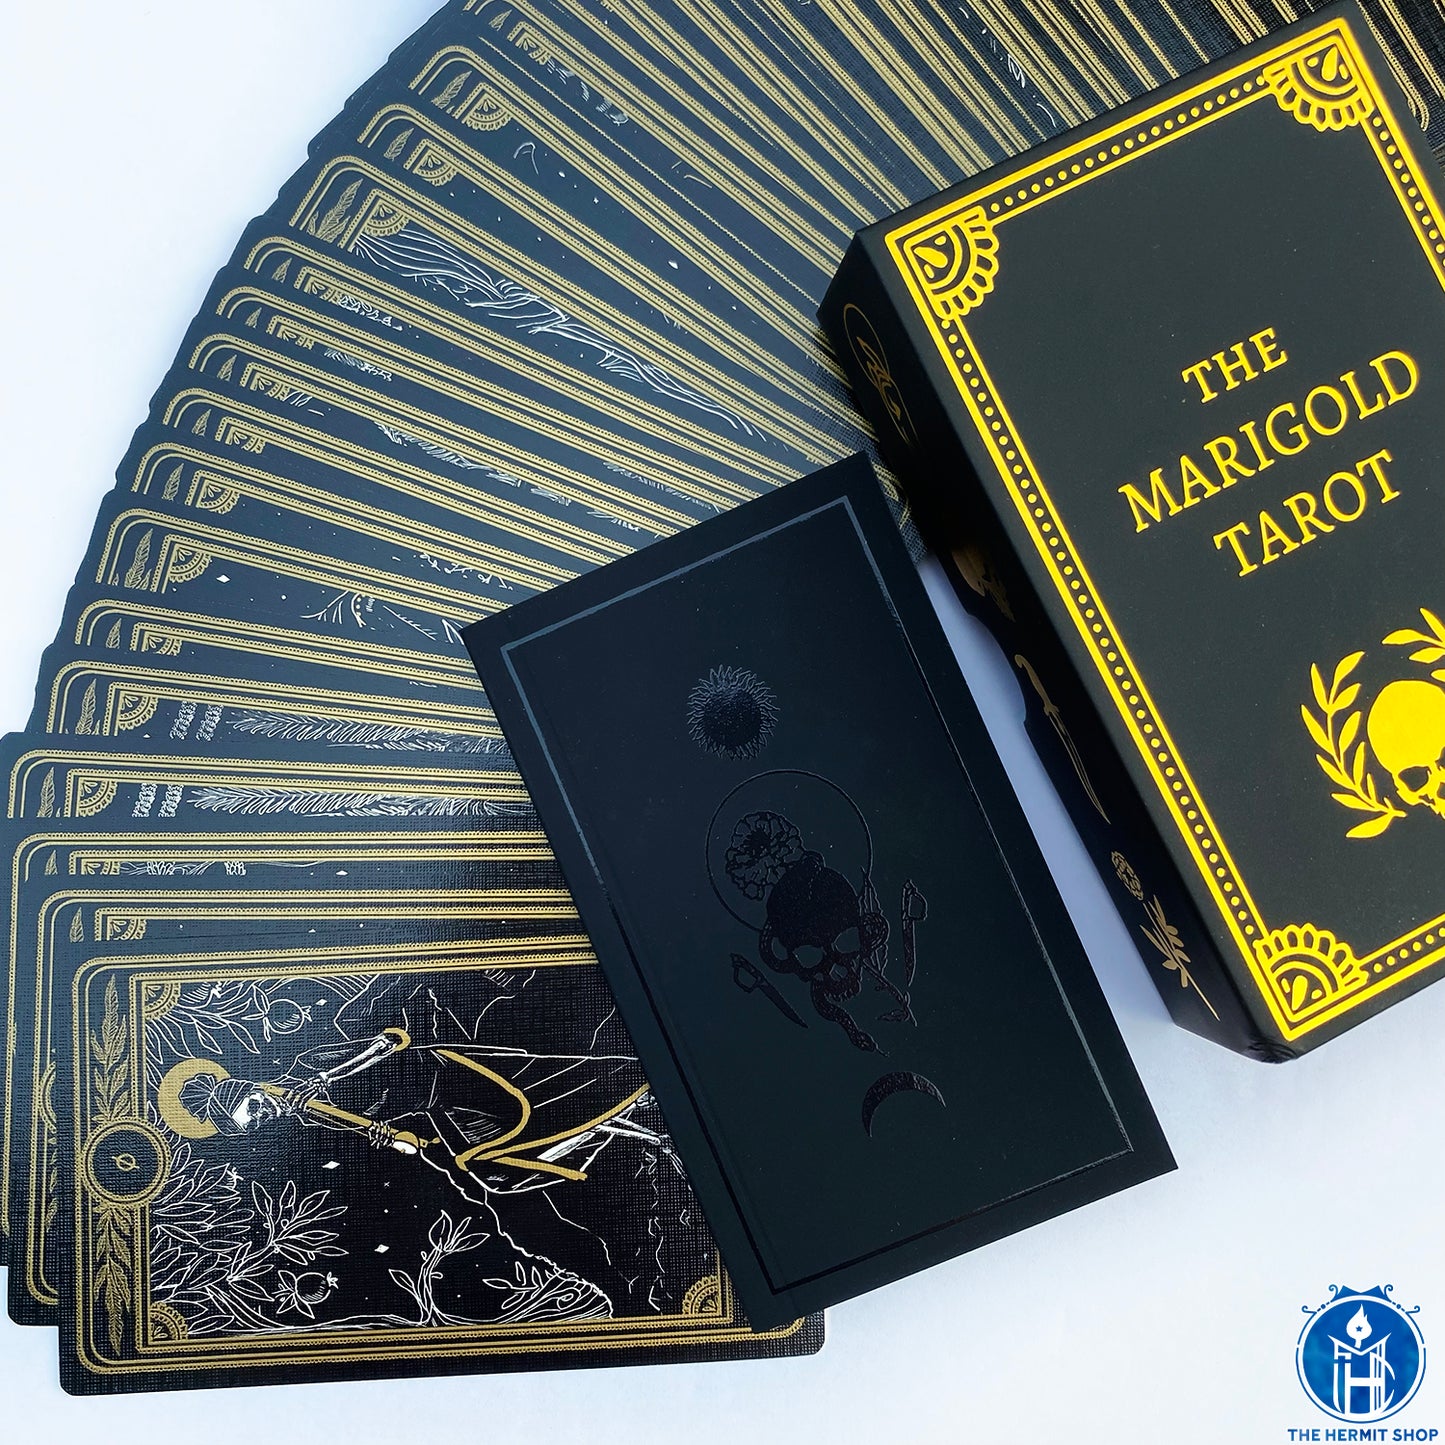 The Marigold Tarot (Gold Gilded Edition) 🇨🇦